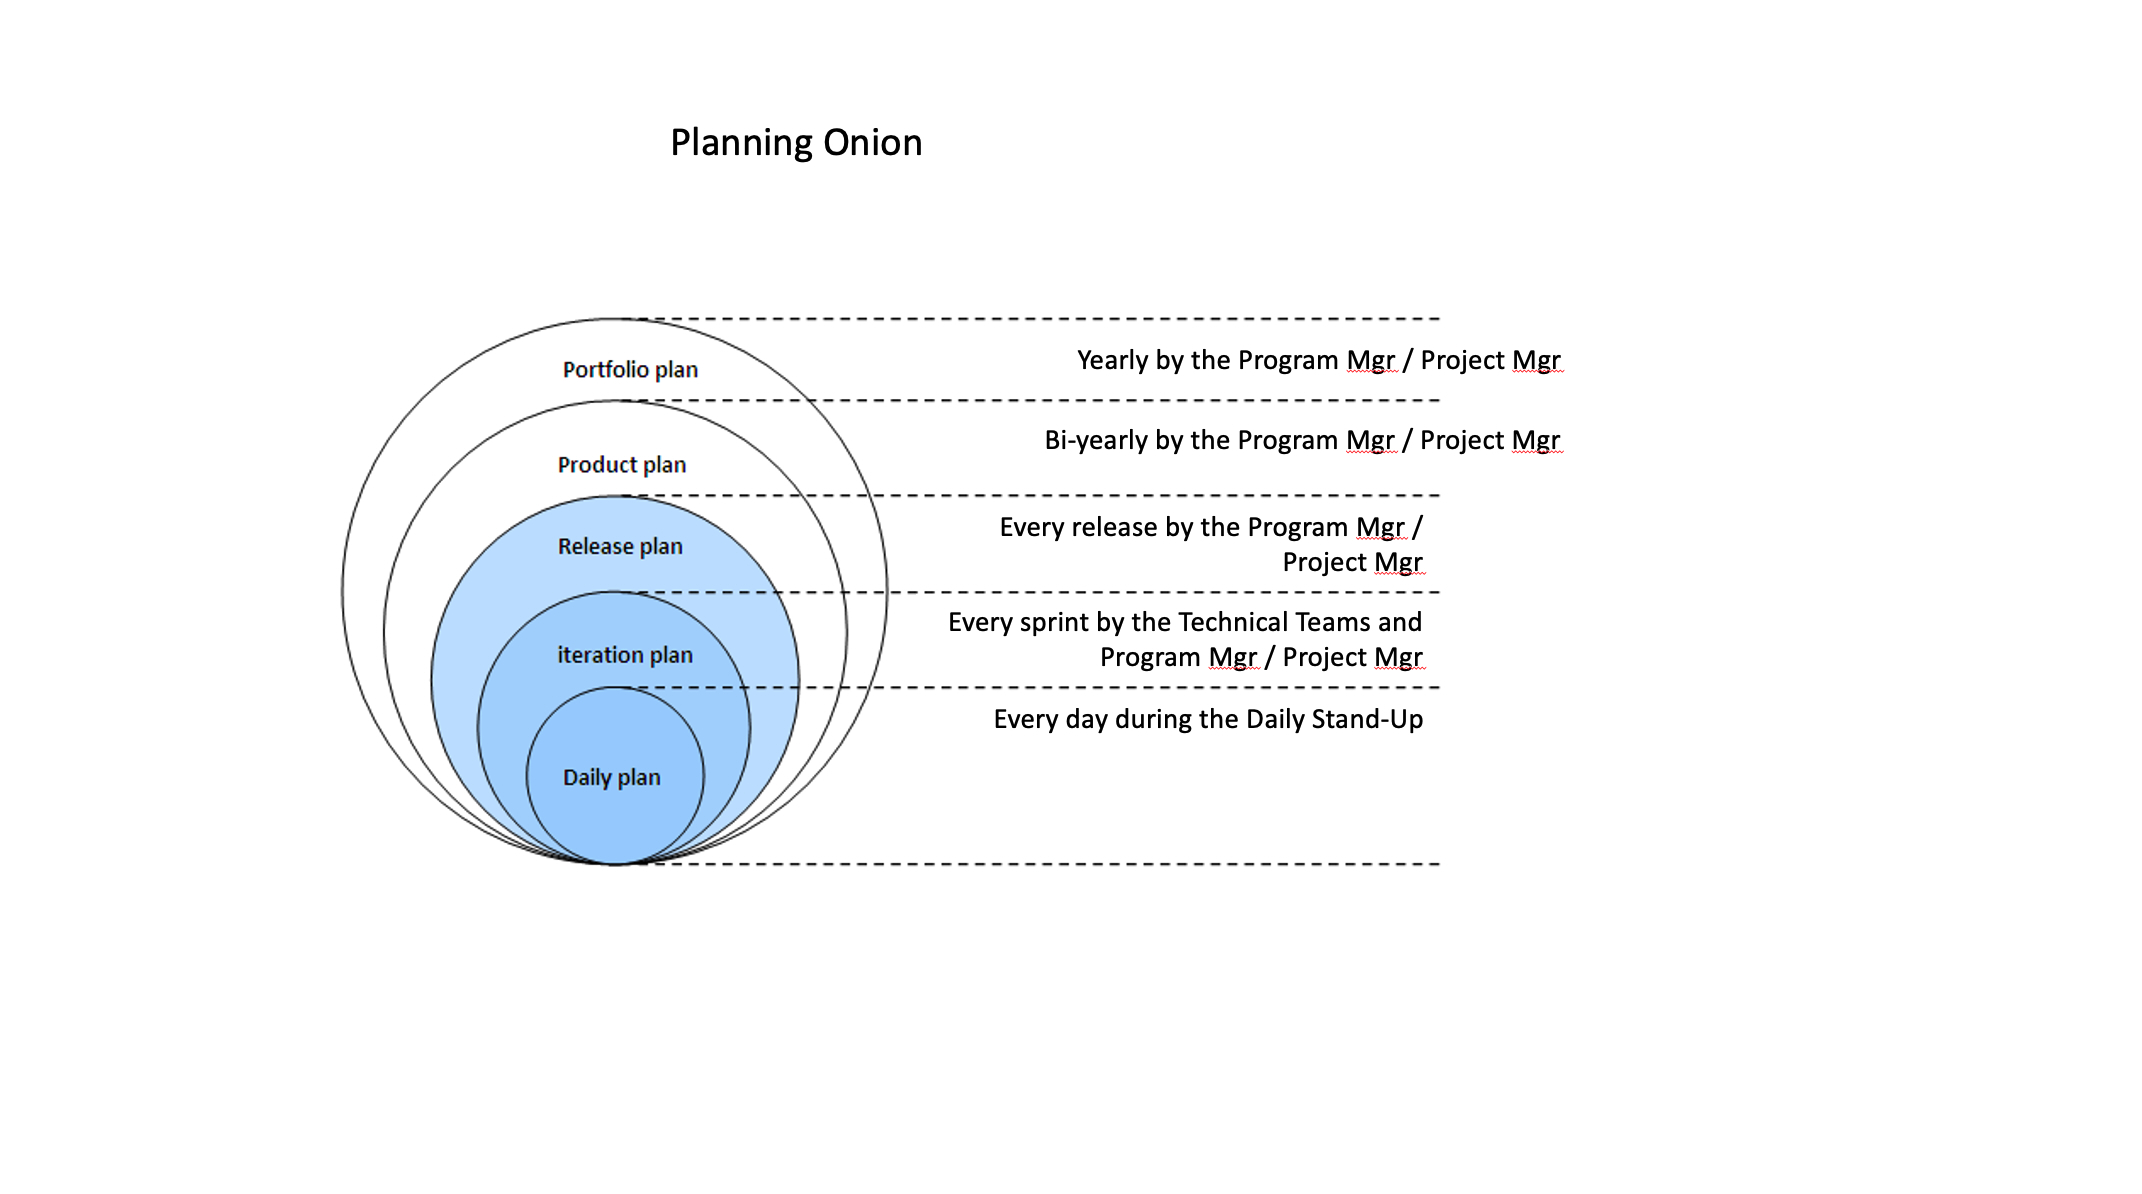 PlanningOnion.jpg